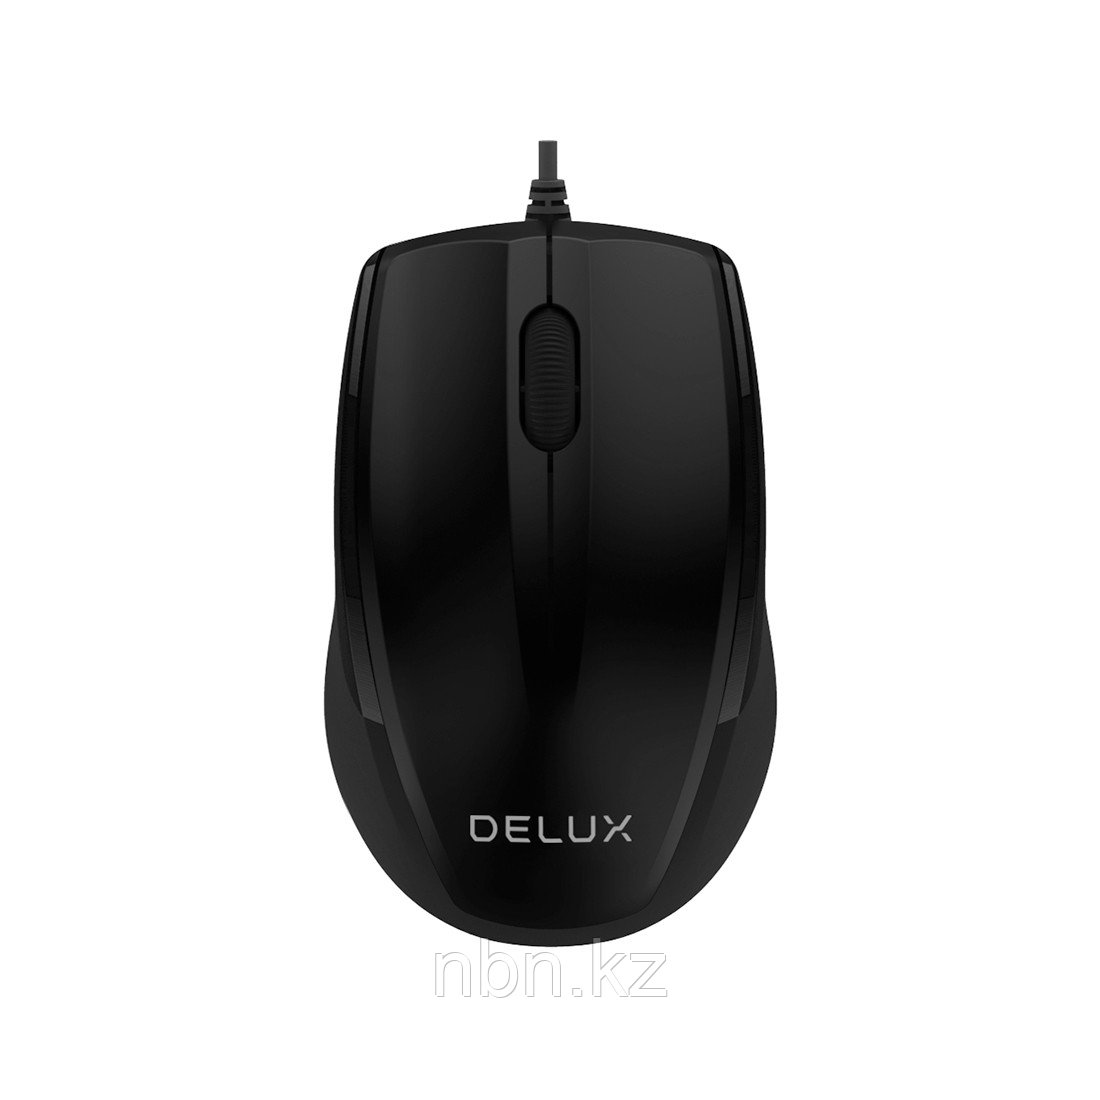 Компьютерная мышь Delux DLM-321OUB, фото 1